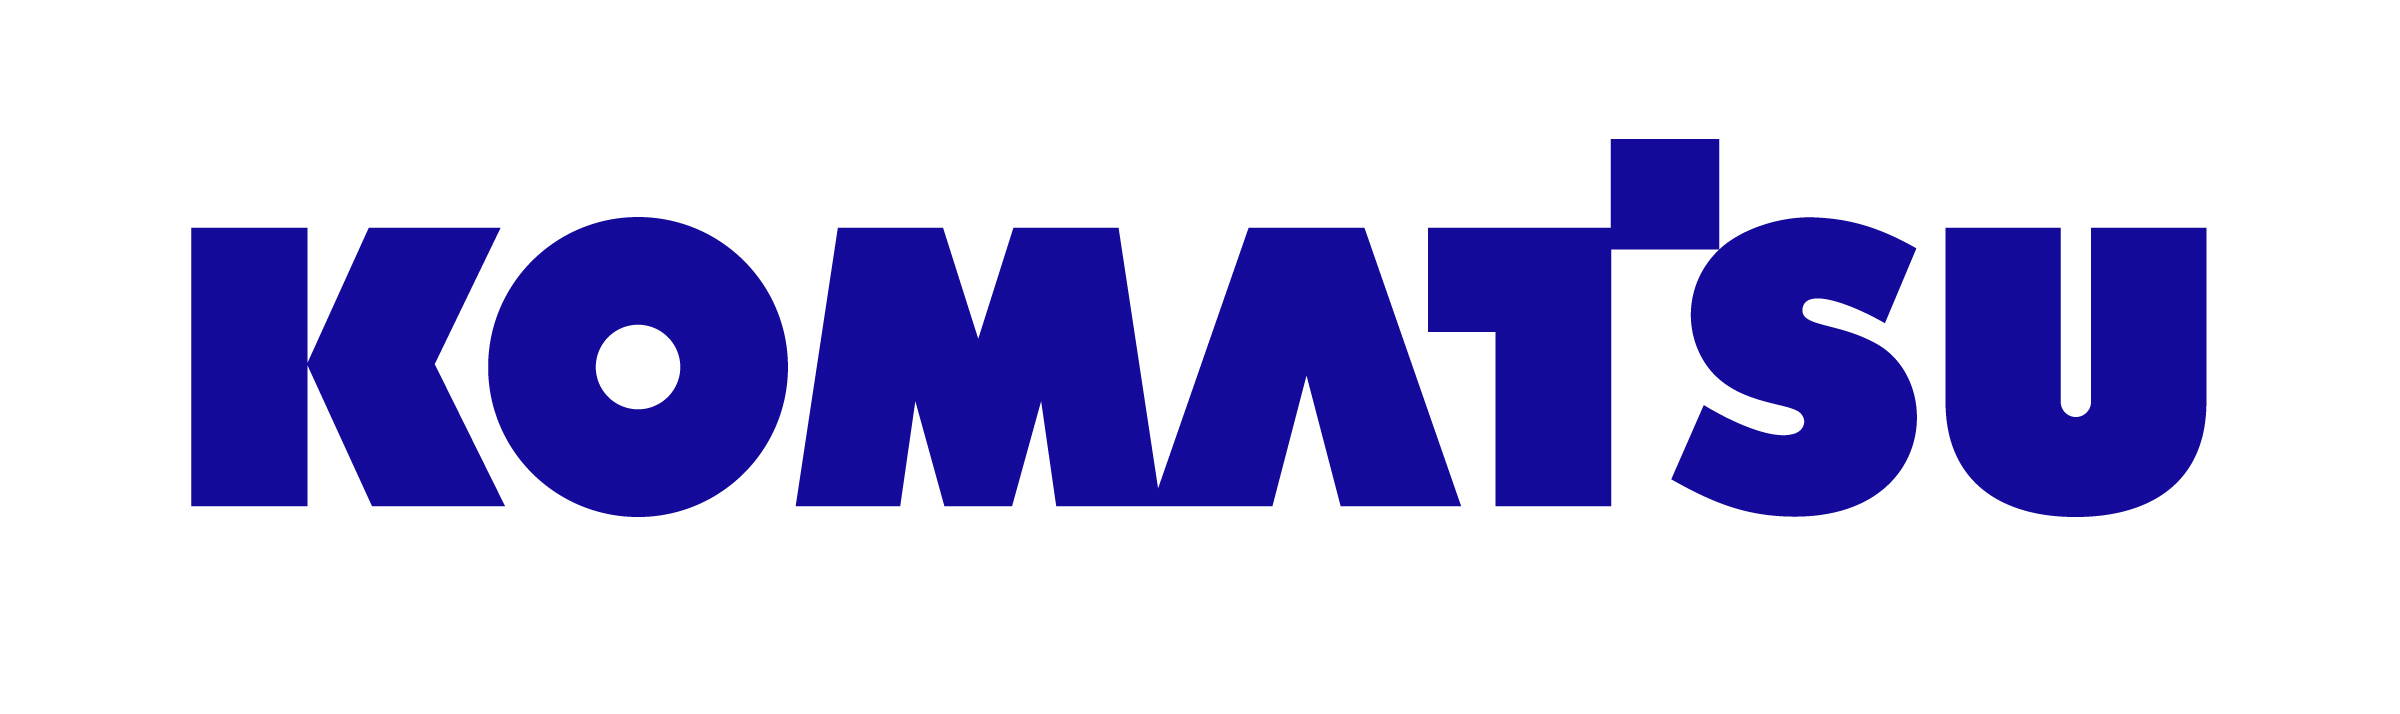 Komatsu Mining Corporation Logo